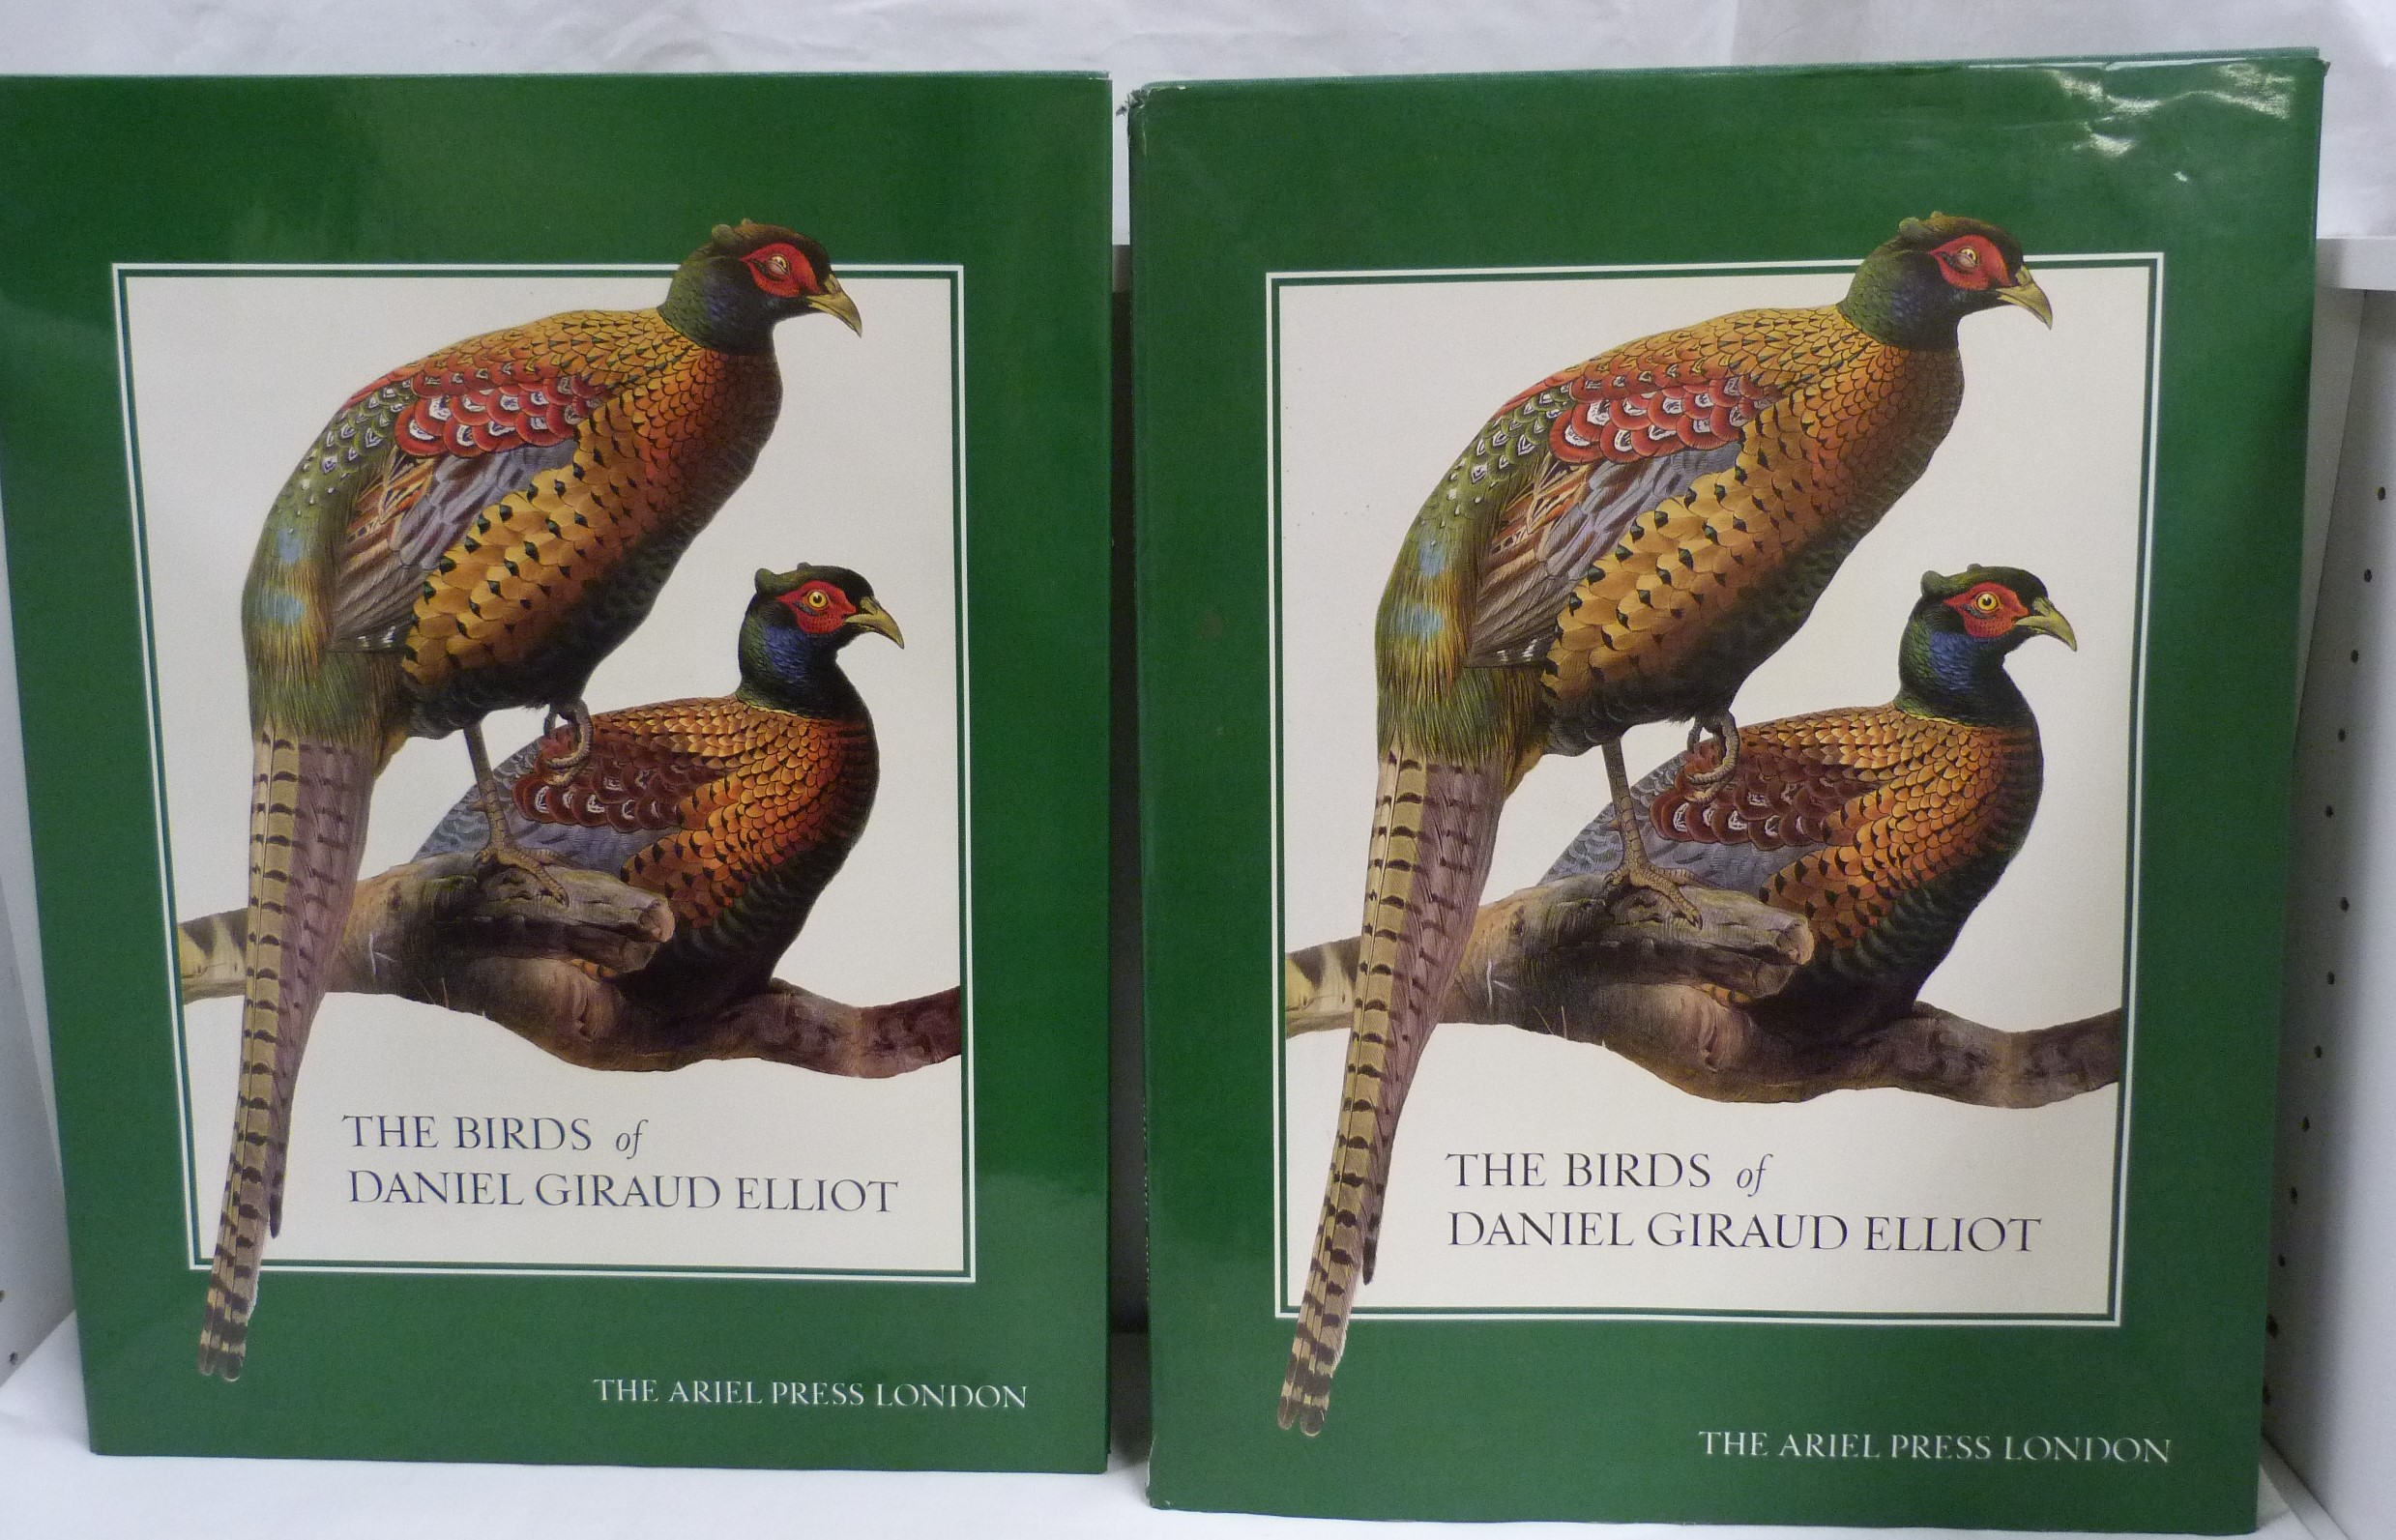 ARIEL PRESS.  The Birds of Daniel Giraud Elliot. Ltd. ed. 1,000. Good col. plates. Folio. Orig.